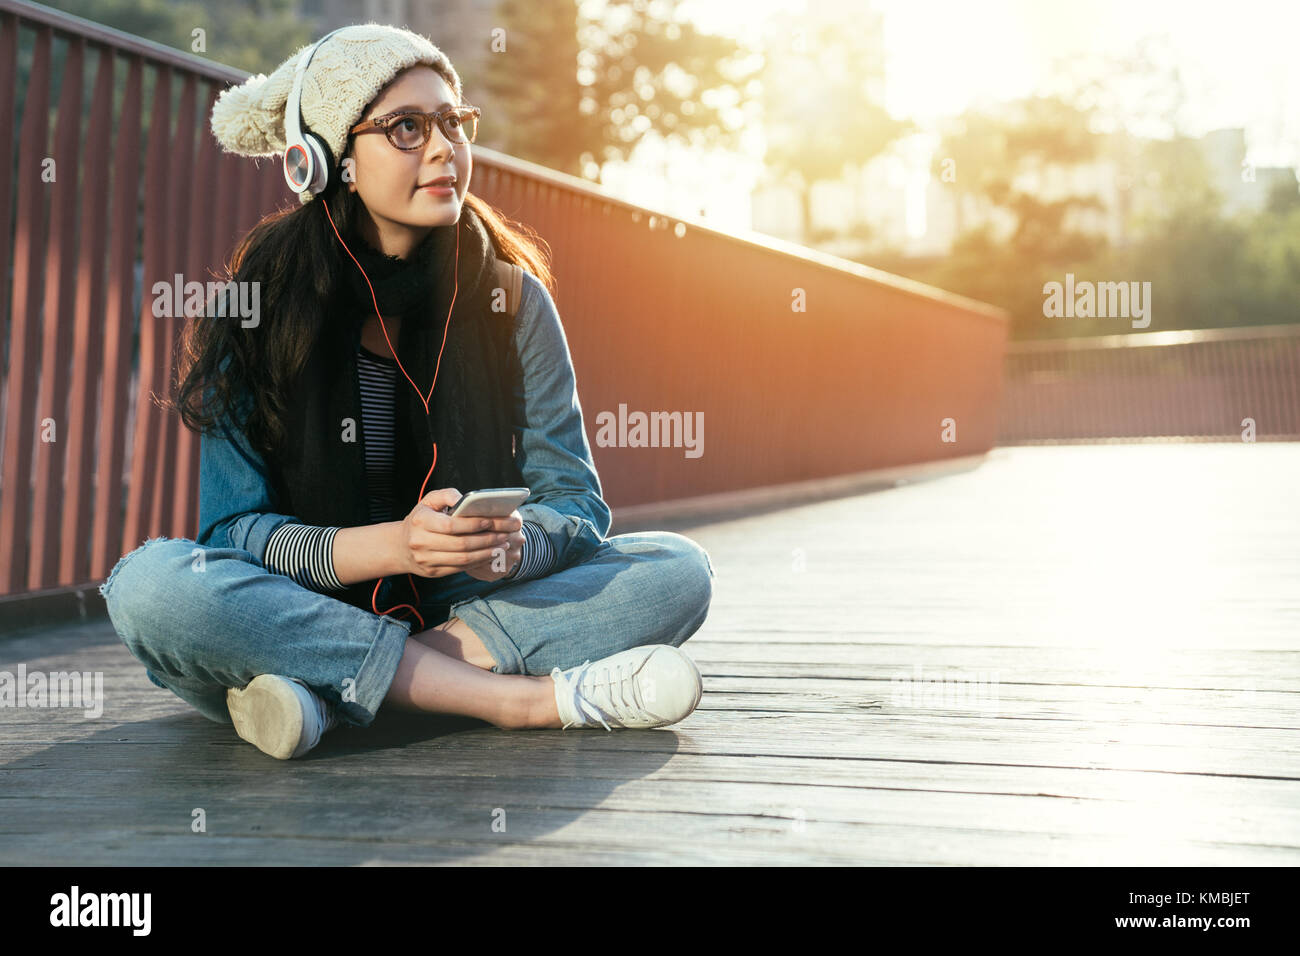 stylish charming asia woman enjoys smartphone music on the city bridge, girl enjoys sunny day in the winter season. Stock Photo